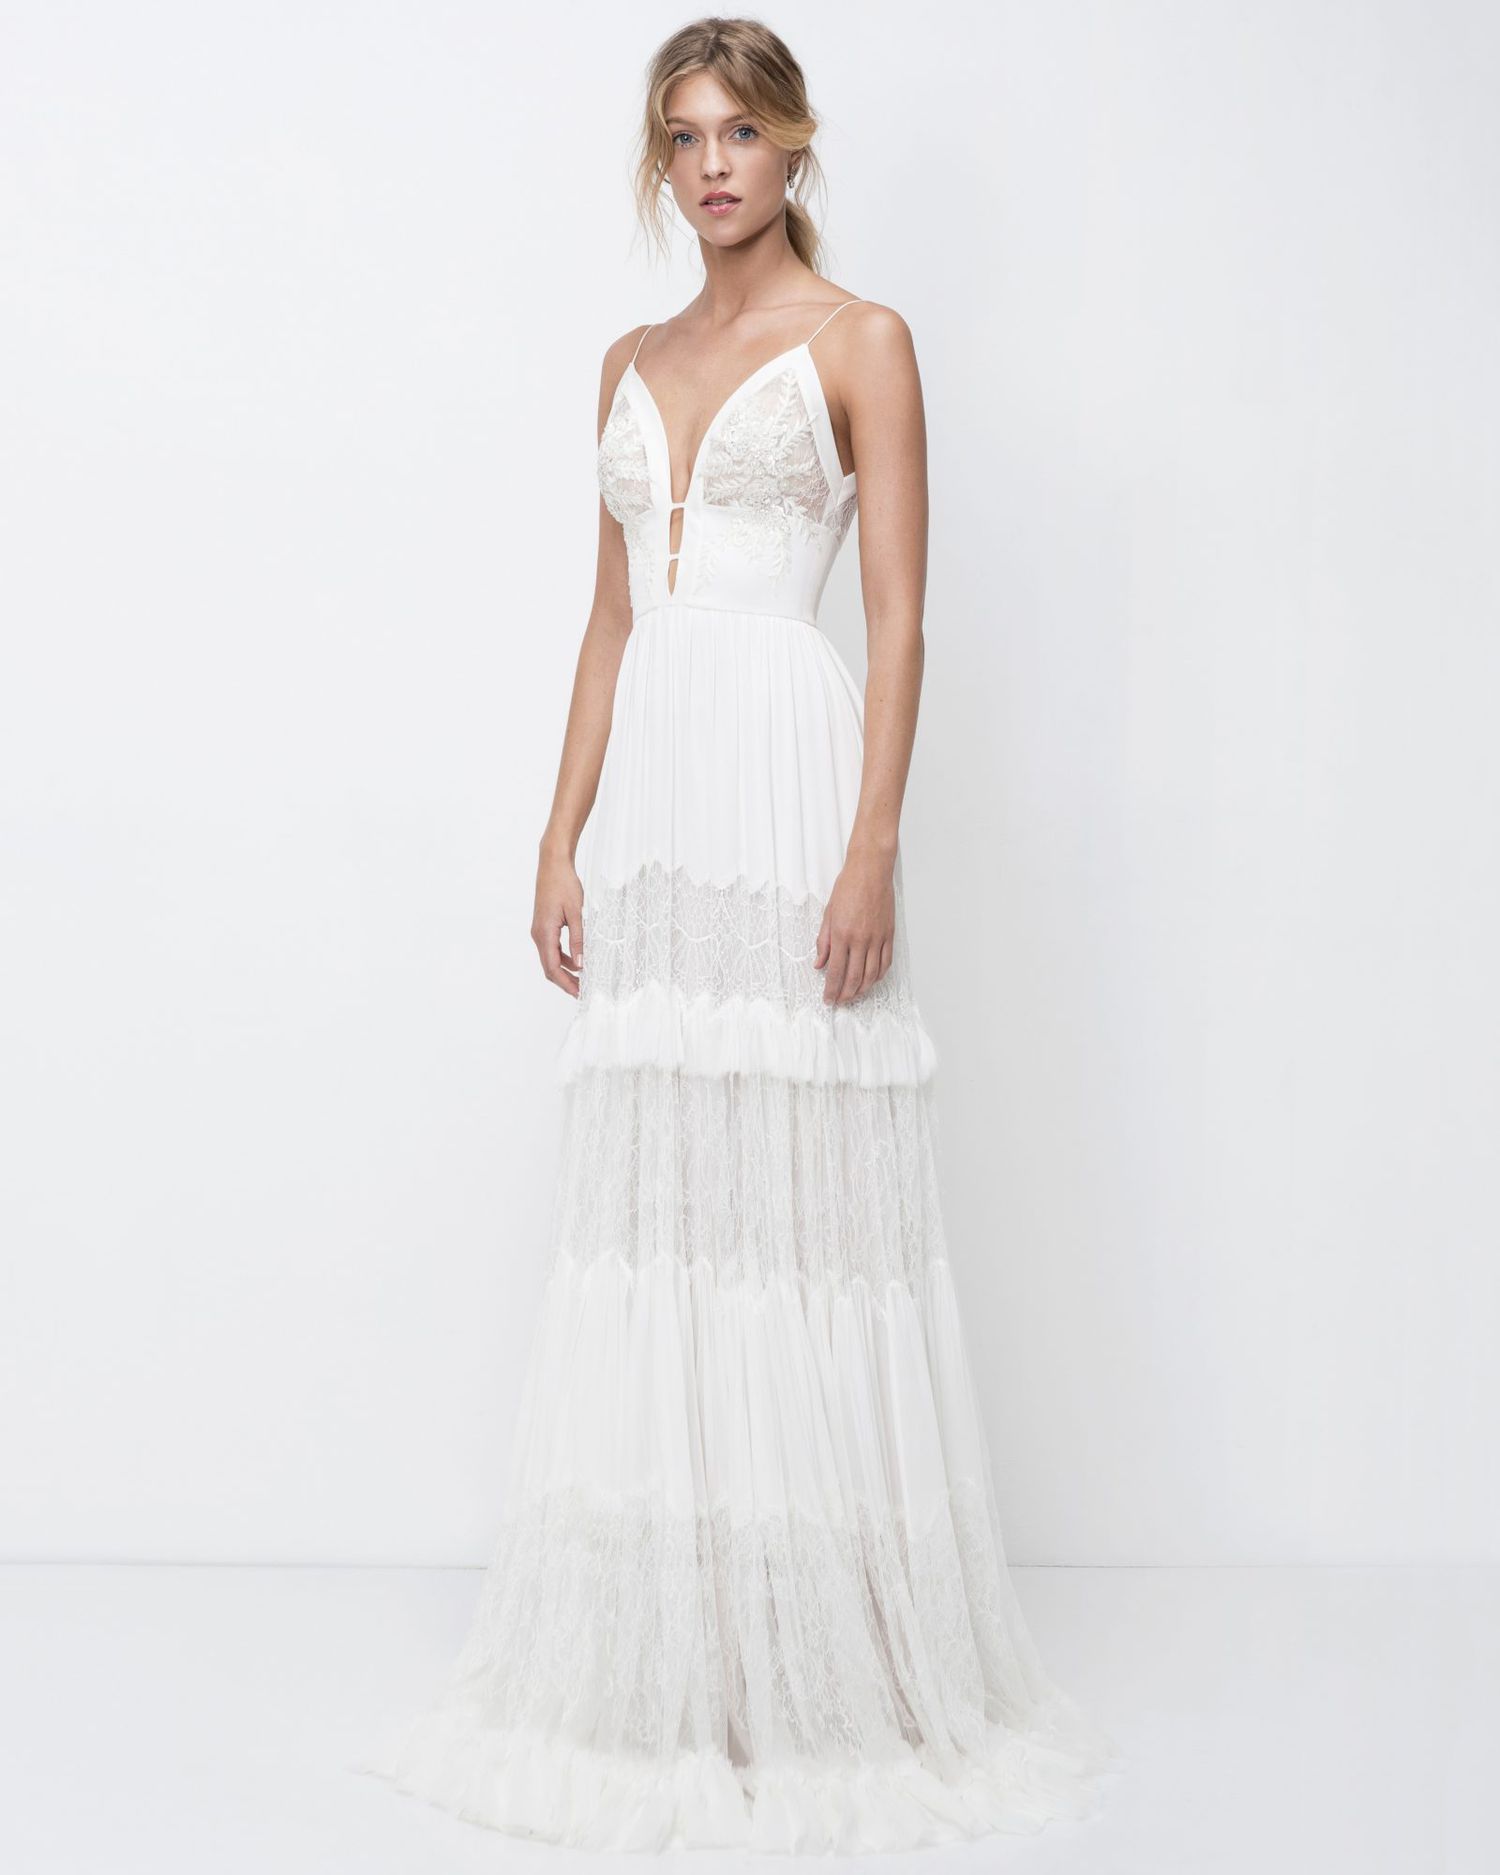 lihi hod lace sheath wedding dress with spaghetti straps fall 2018